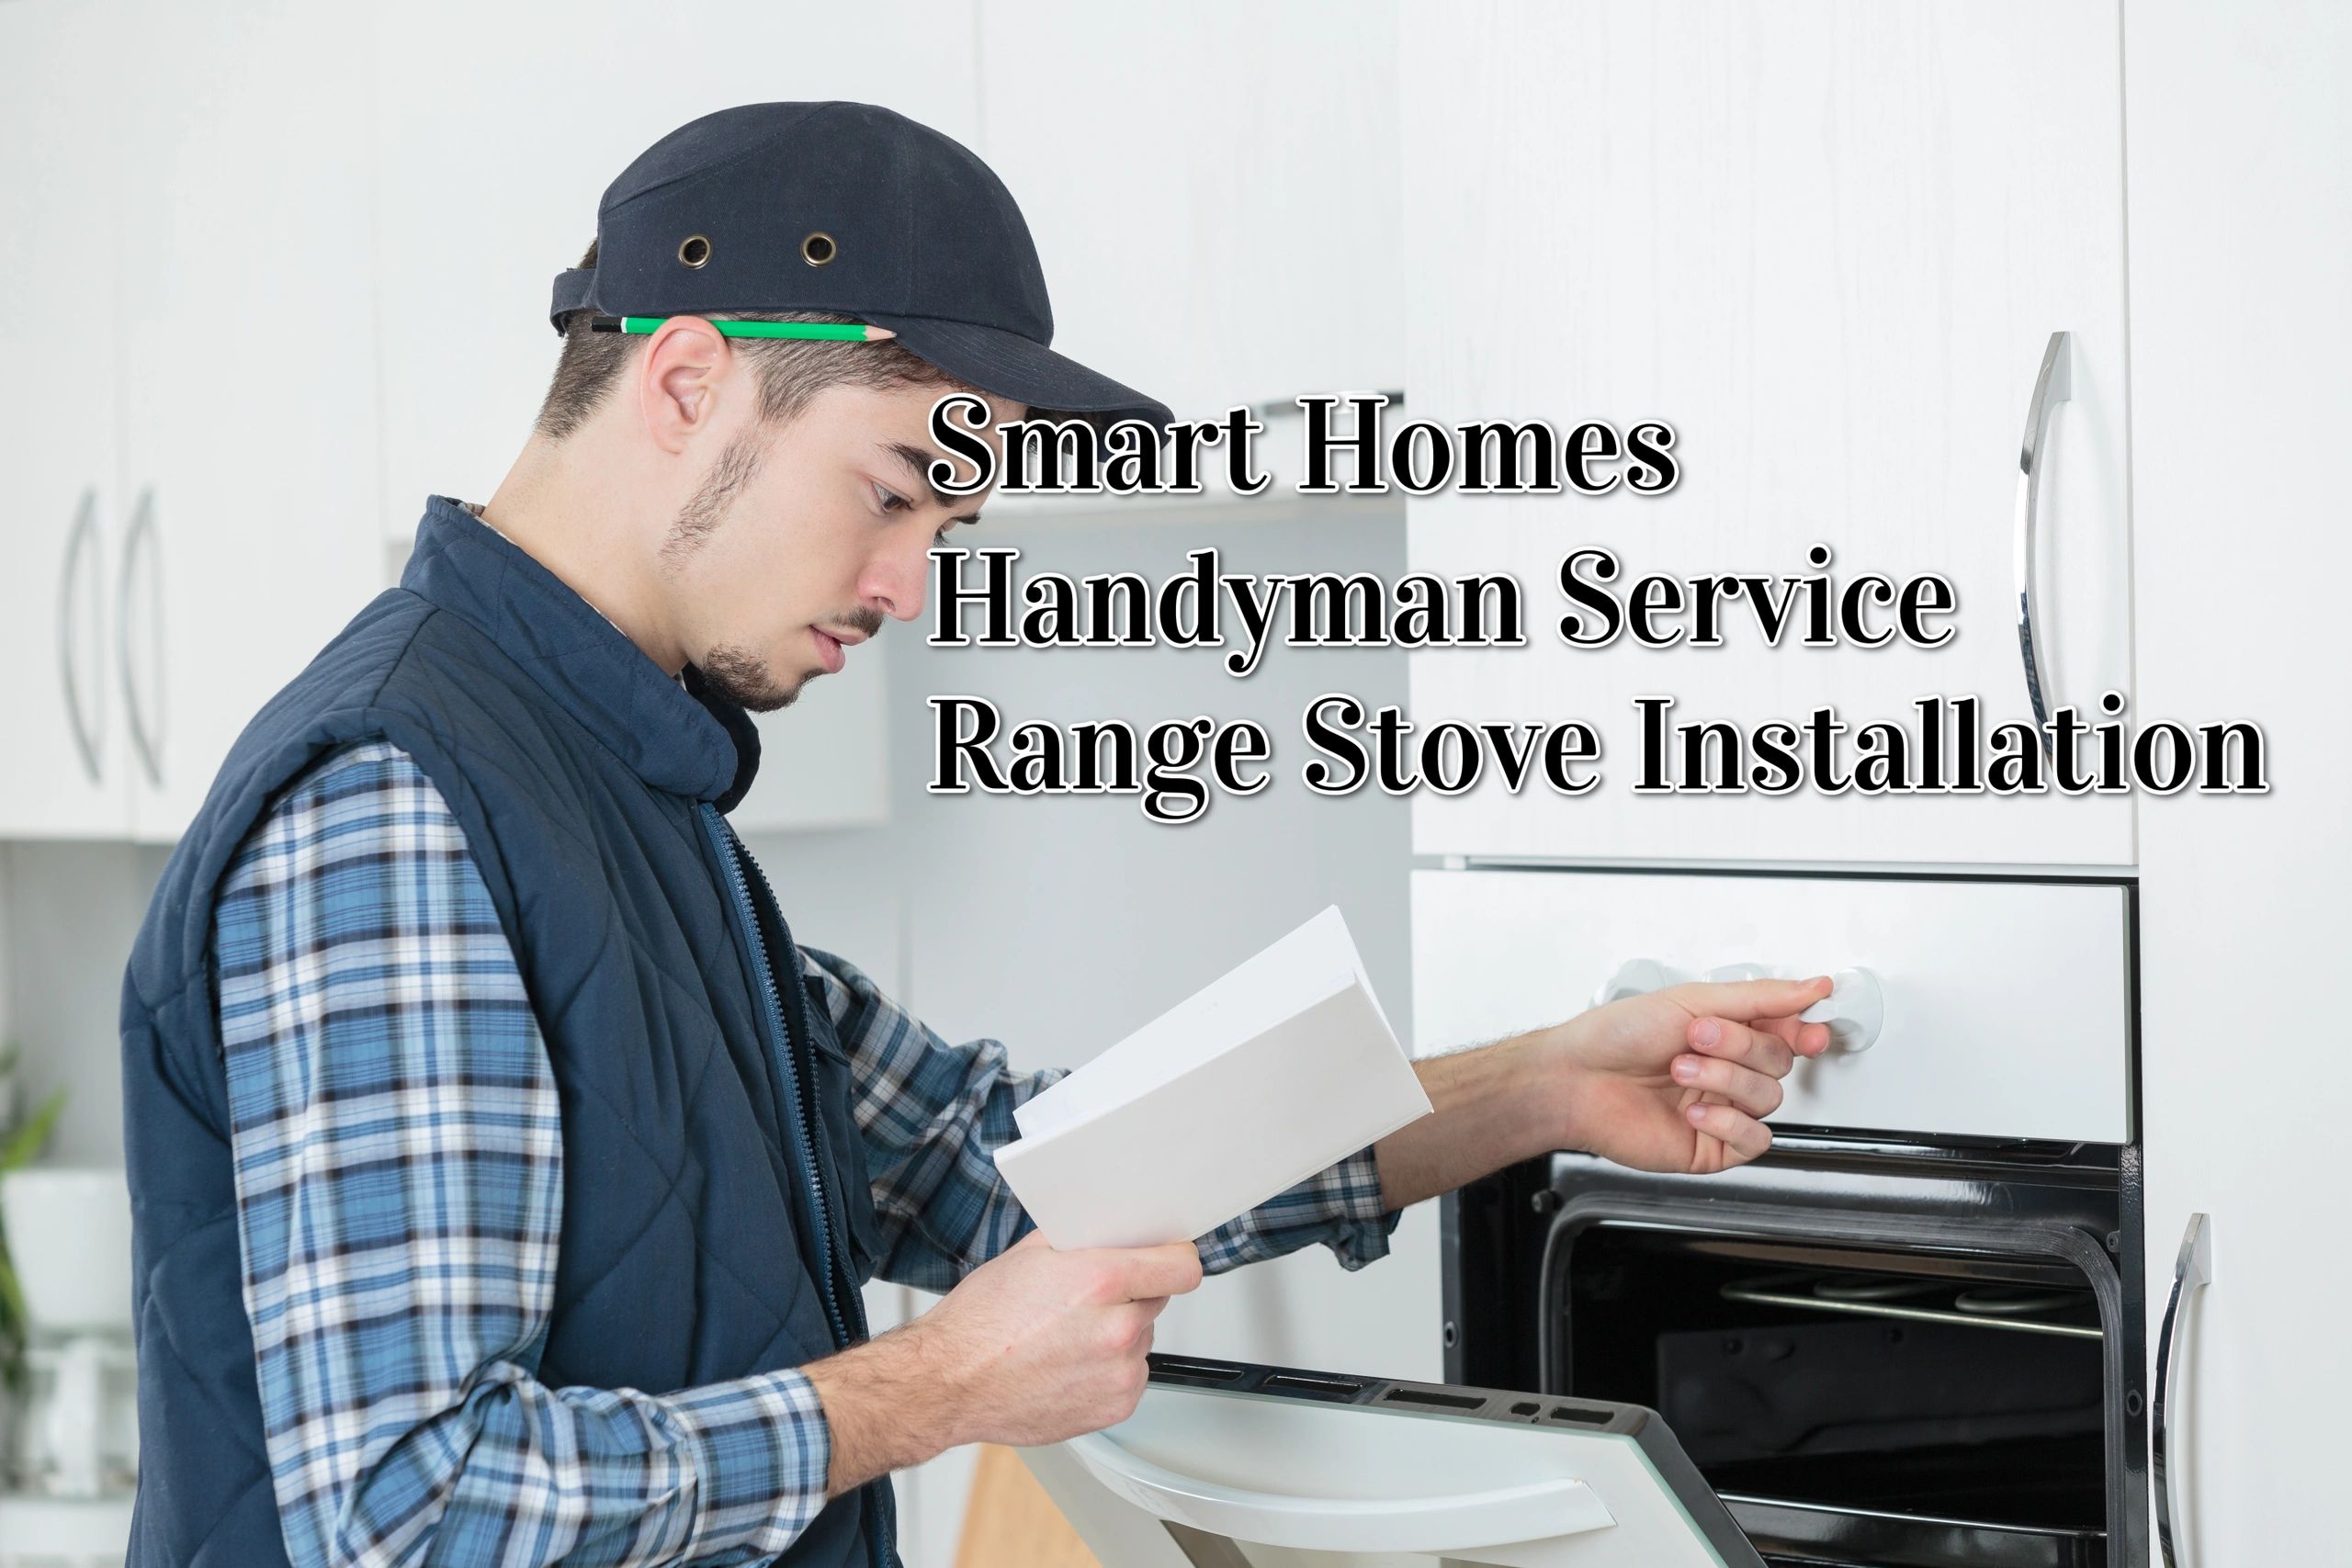 Handyman stove installation service